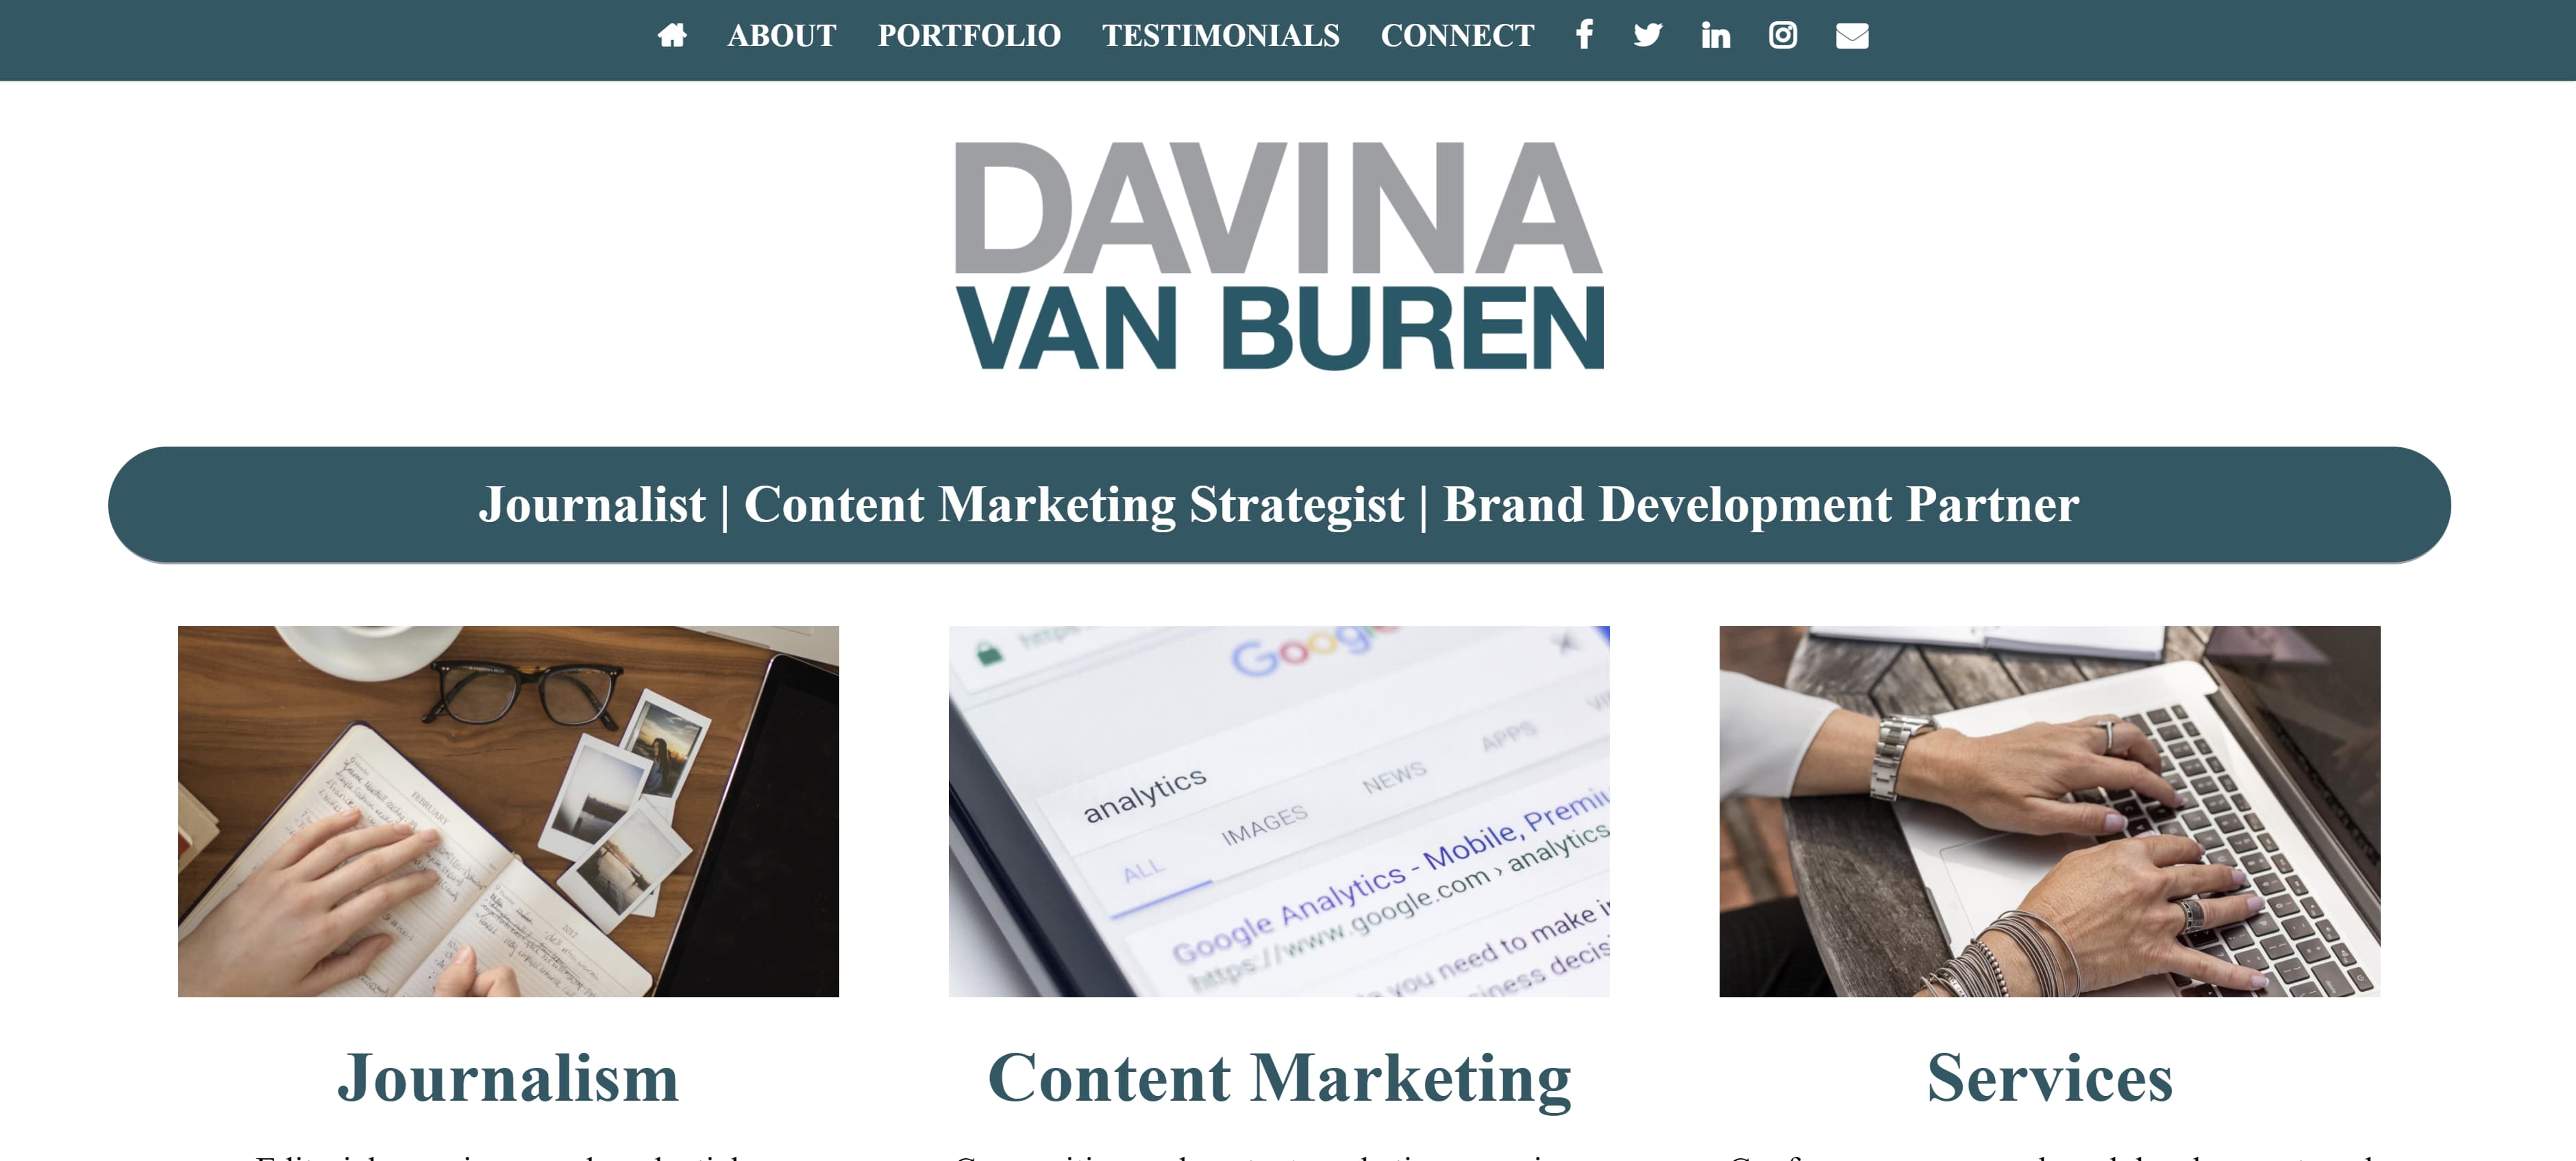 Copywriting portfolio example by Davina van Buren